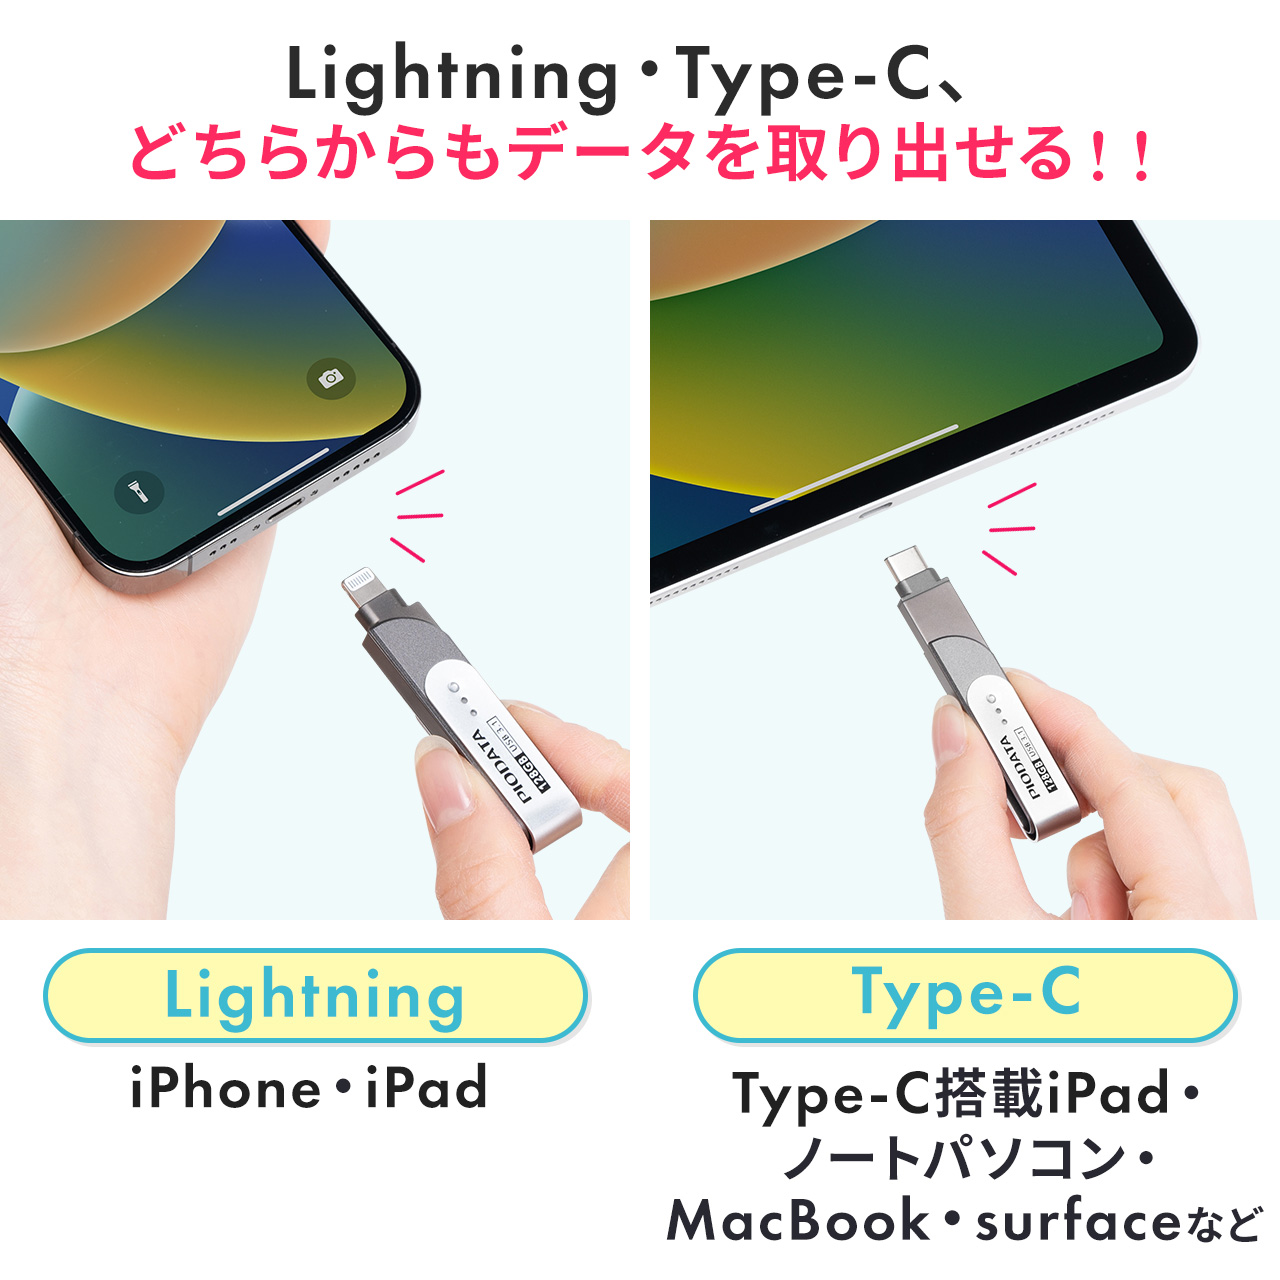 iPhoneEiPad USB lightning-Type-C LightningΉ iPhone iPad MFiF XCO 256GB 600-IPLC256GX3